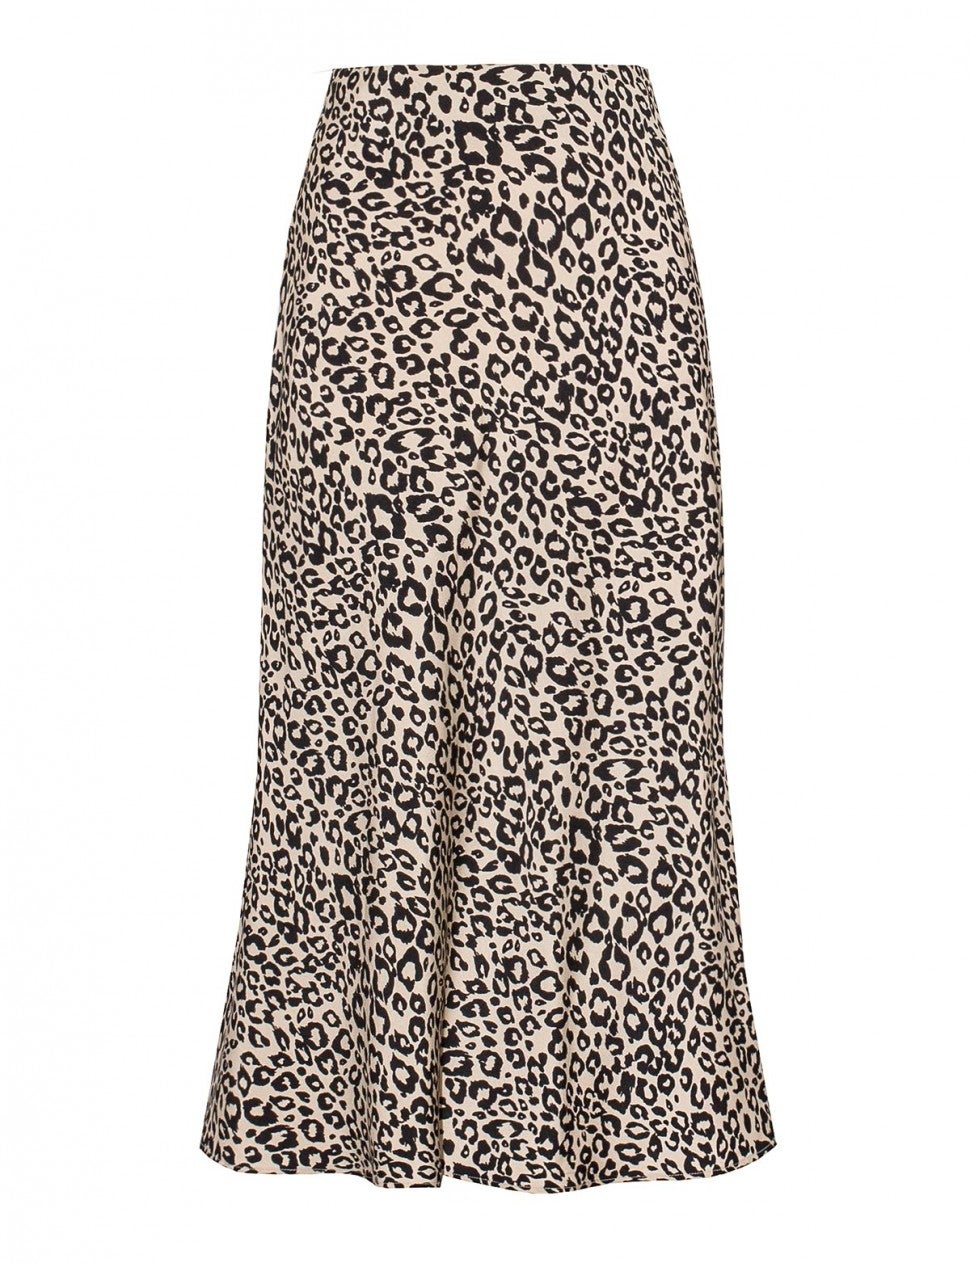 Pixie Market leopard skirt